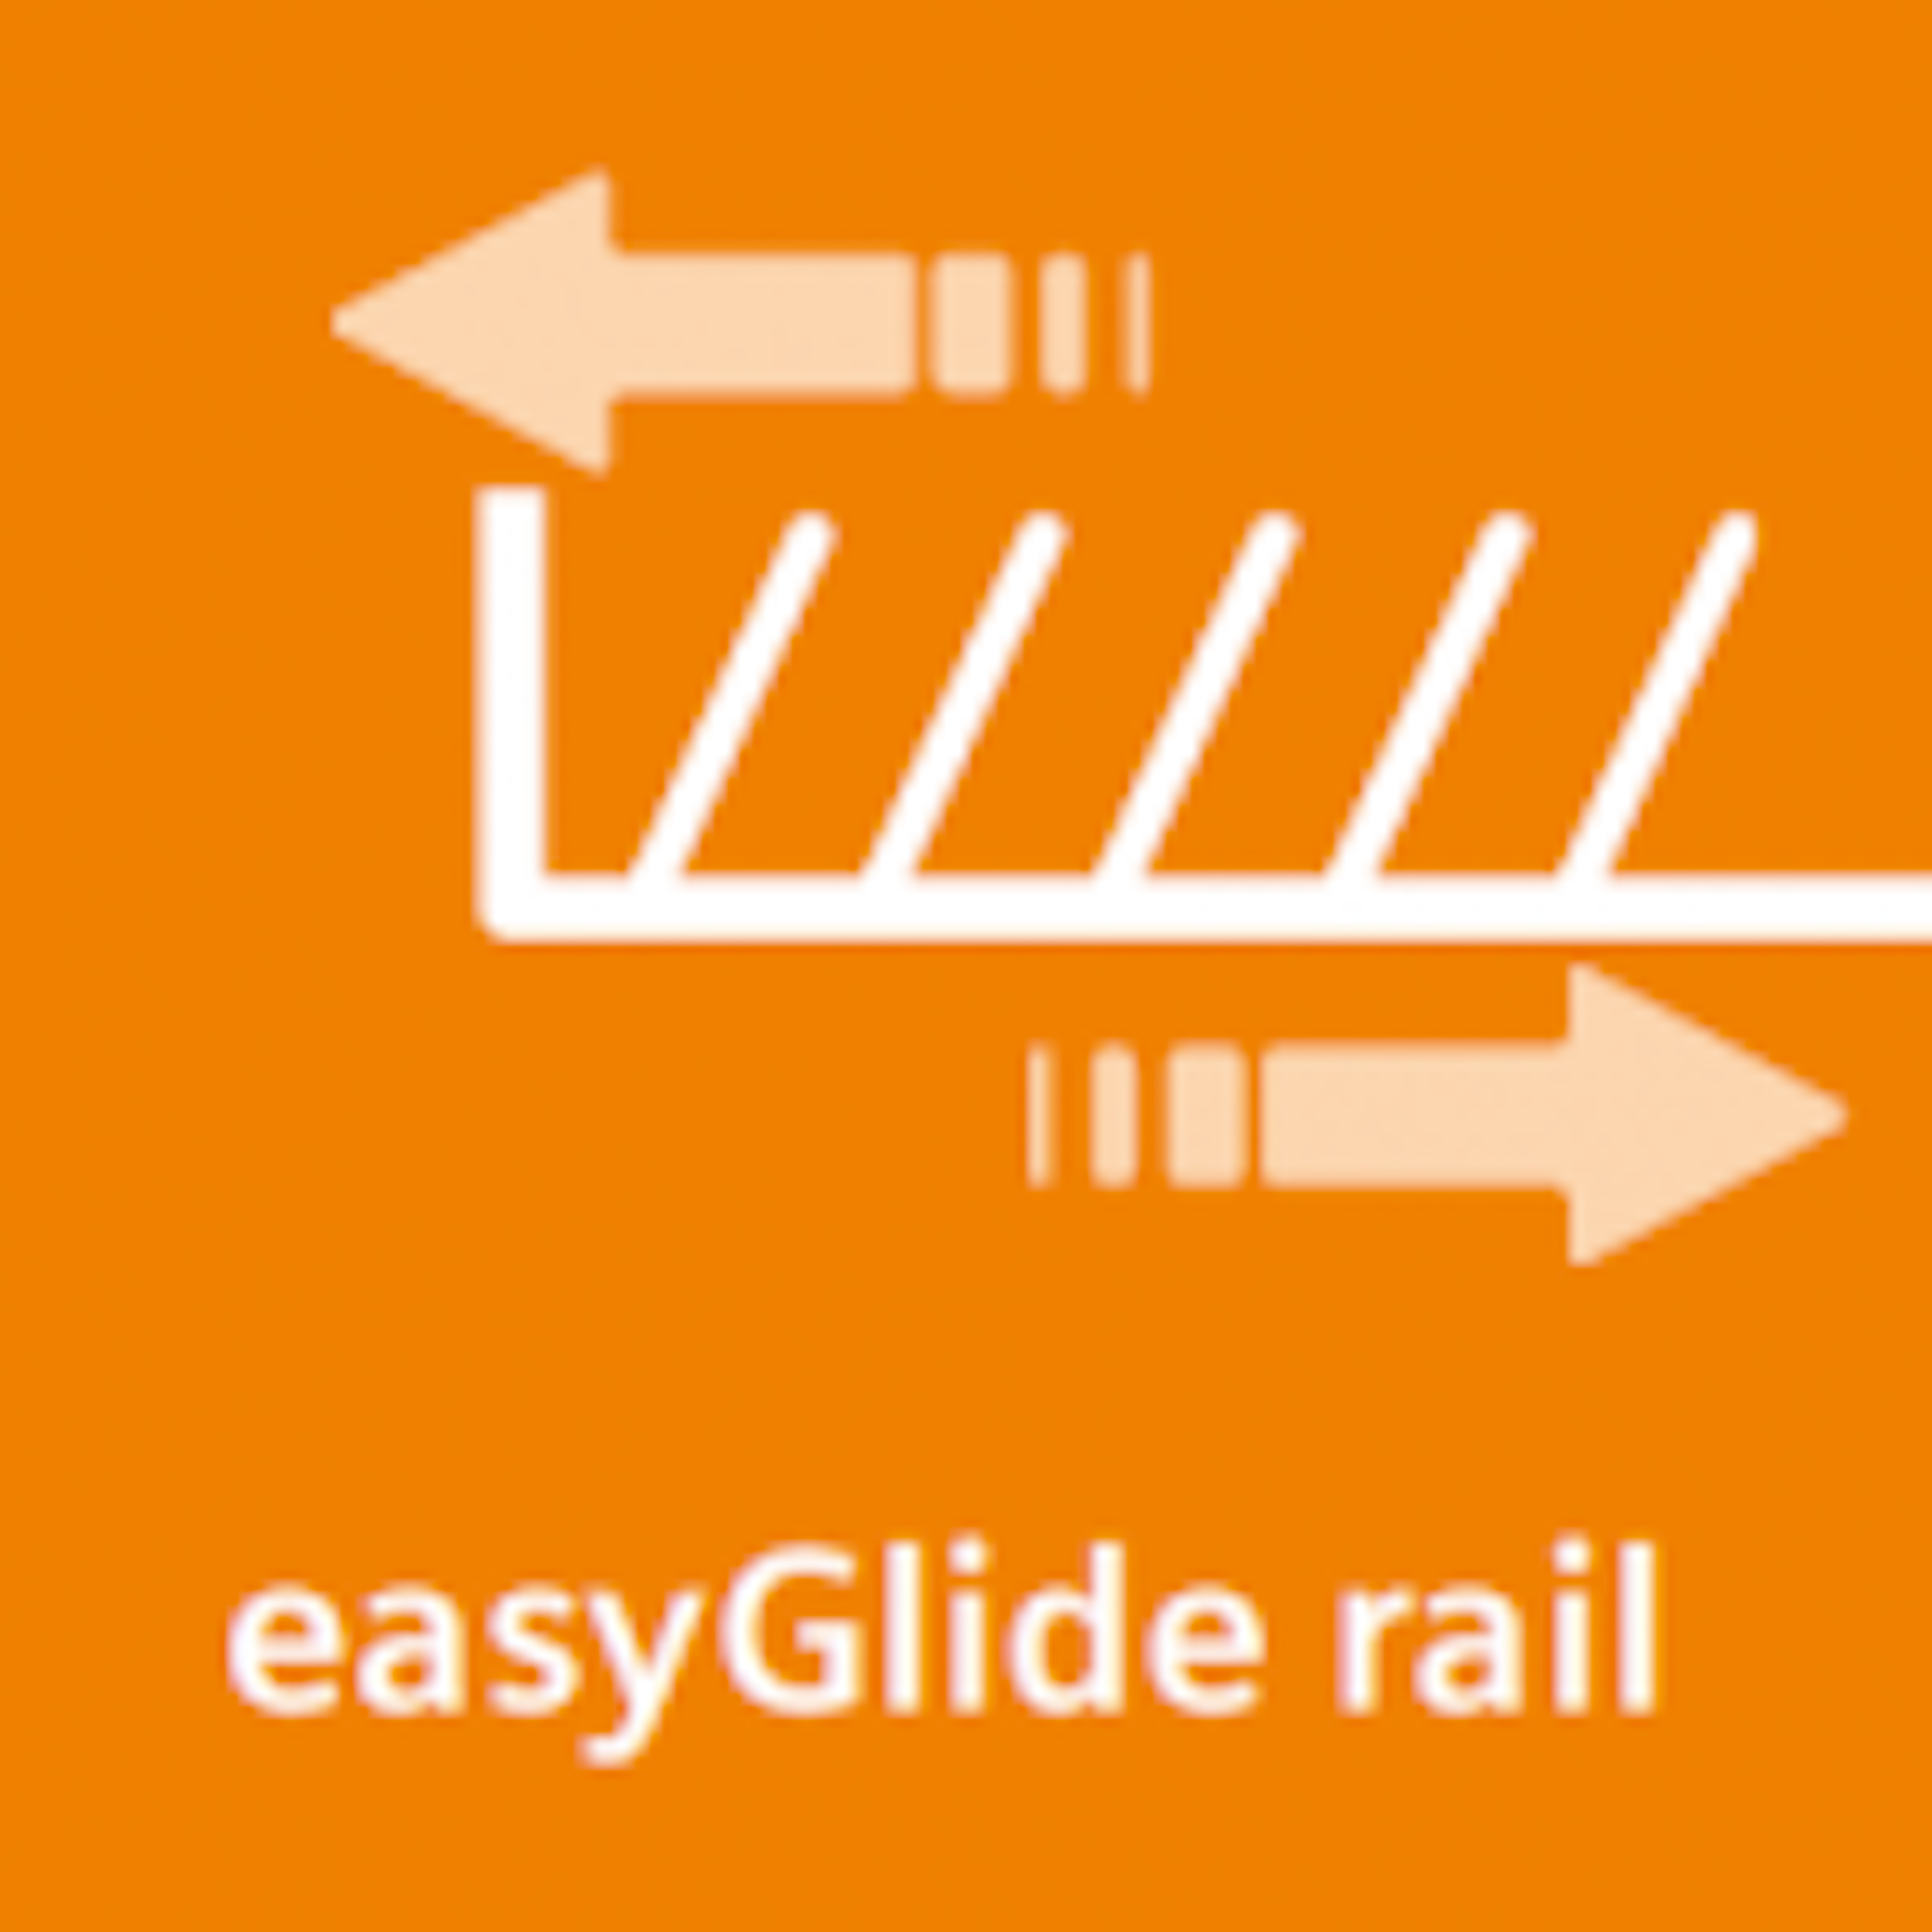 easyGlide rails